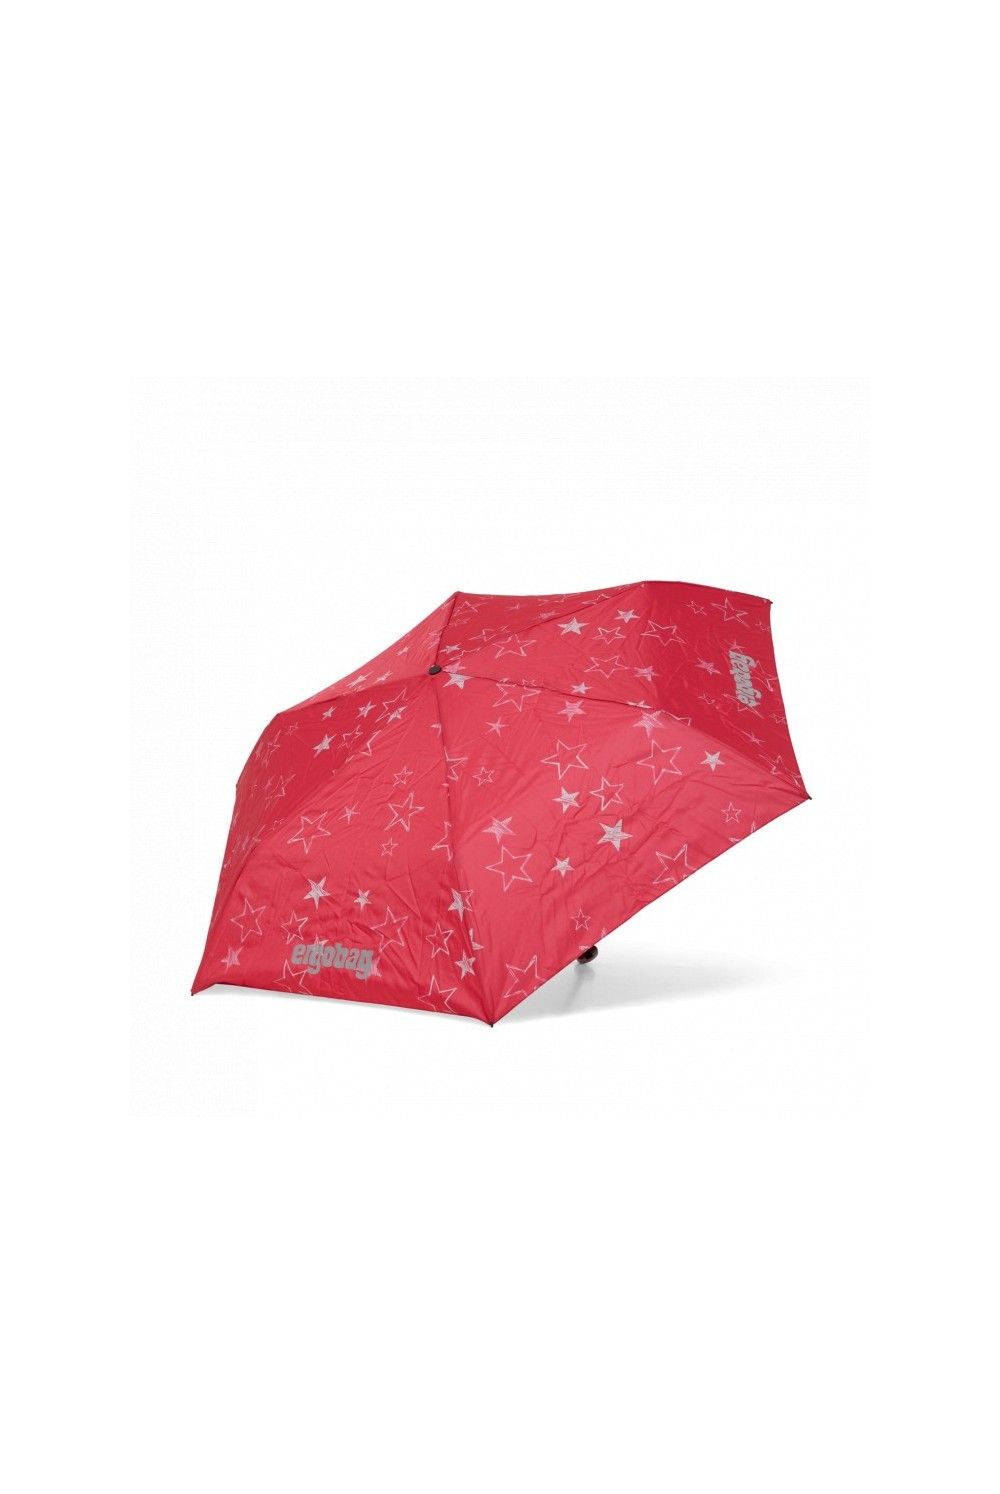 Parapluie Ergobag CinBärella